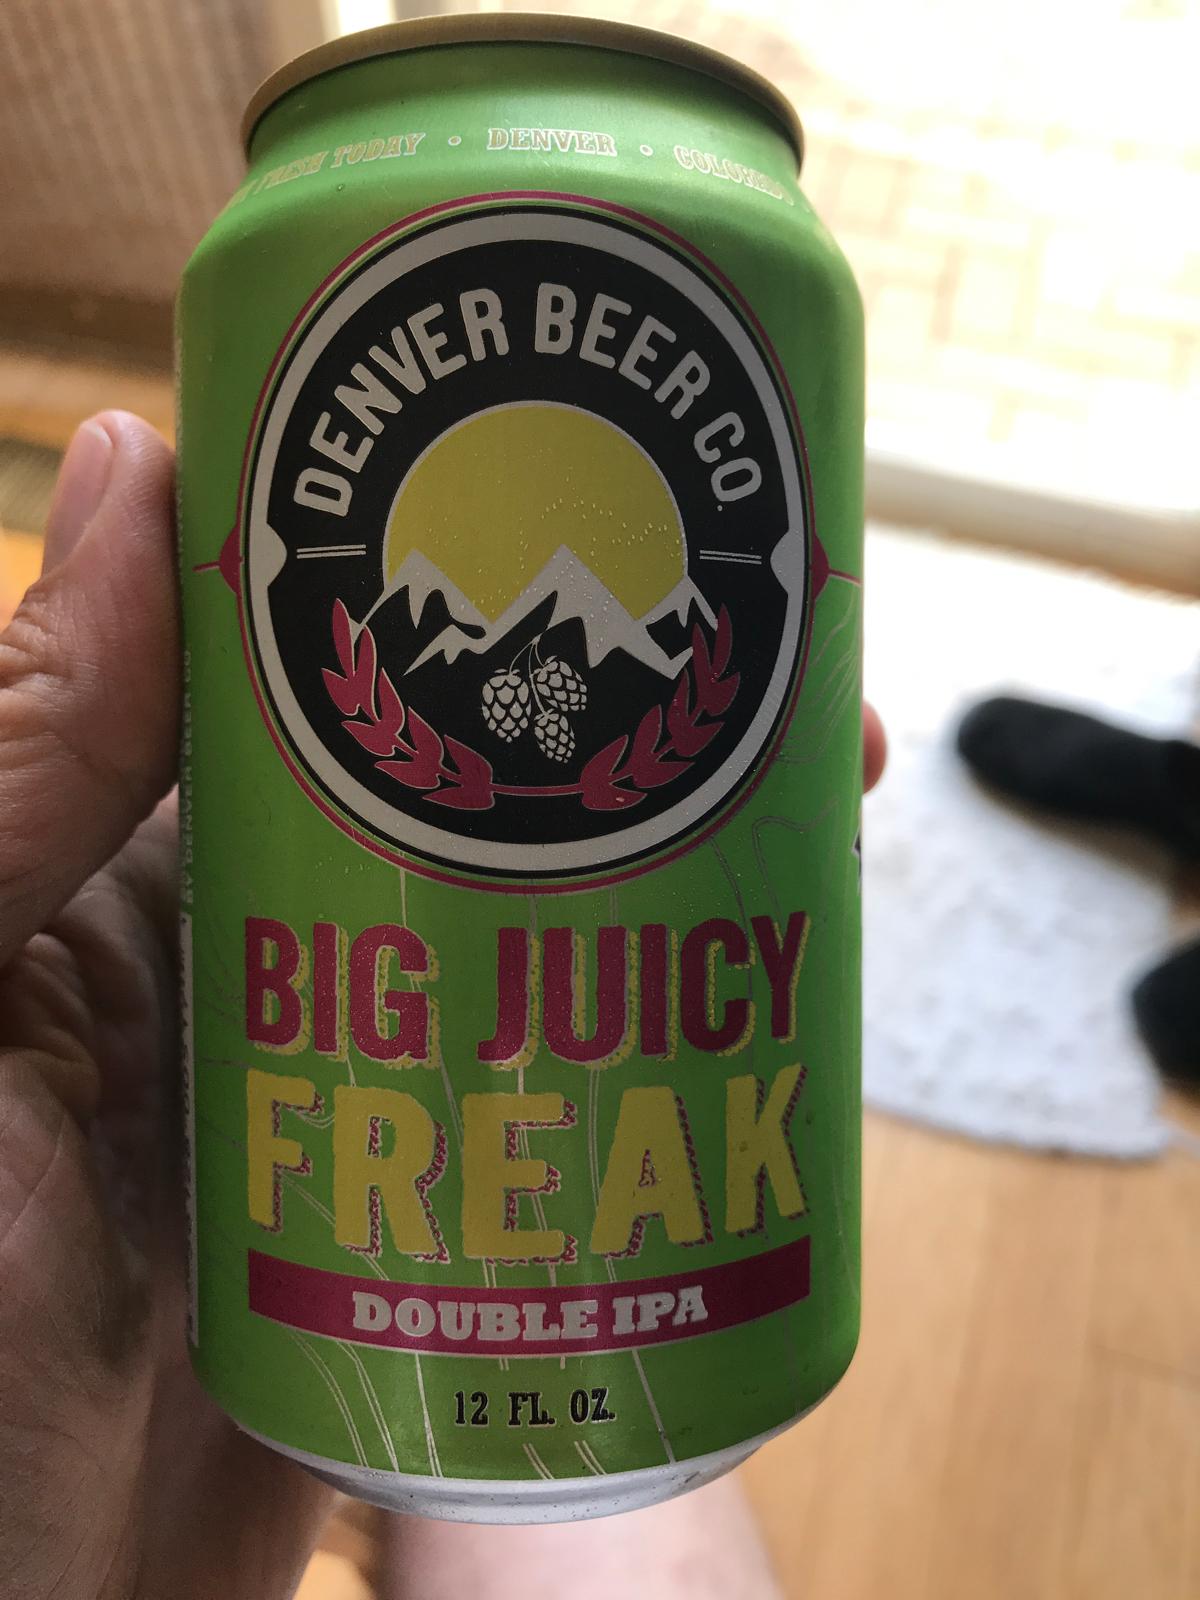 Big Juicy Freak